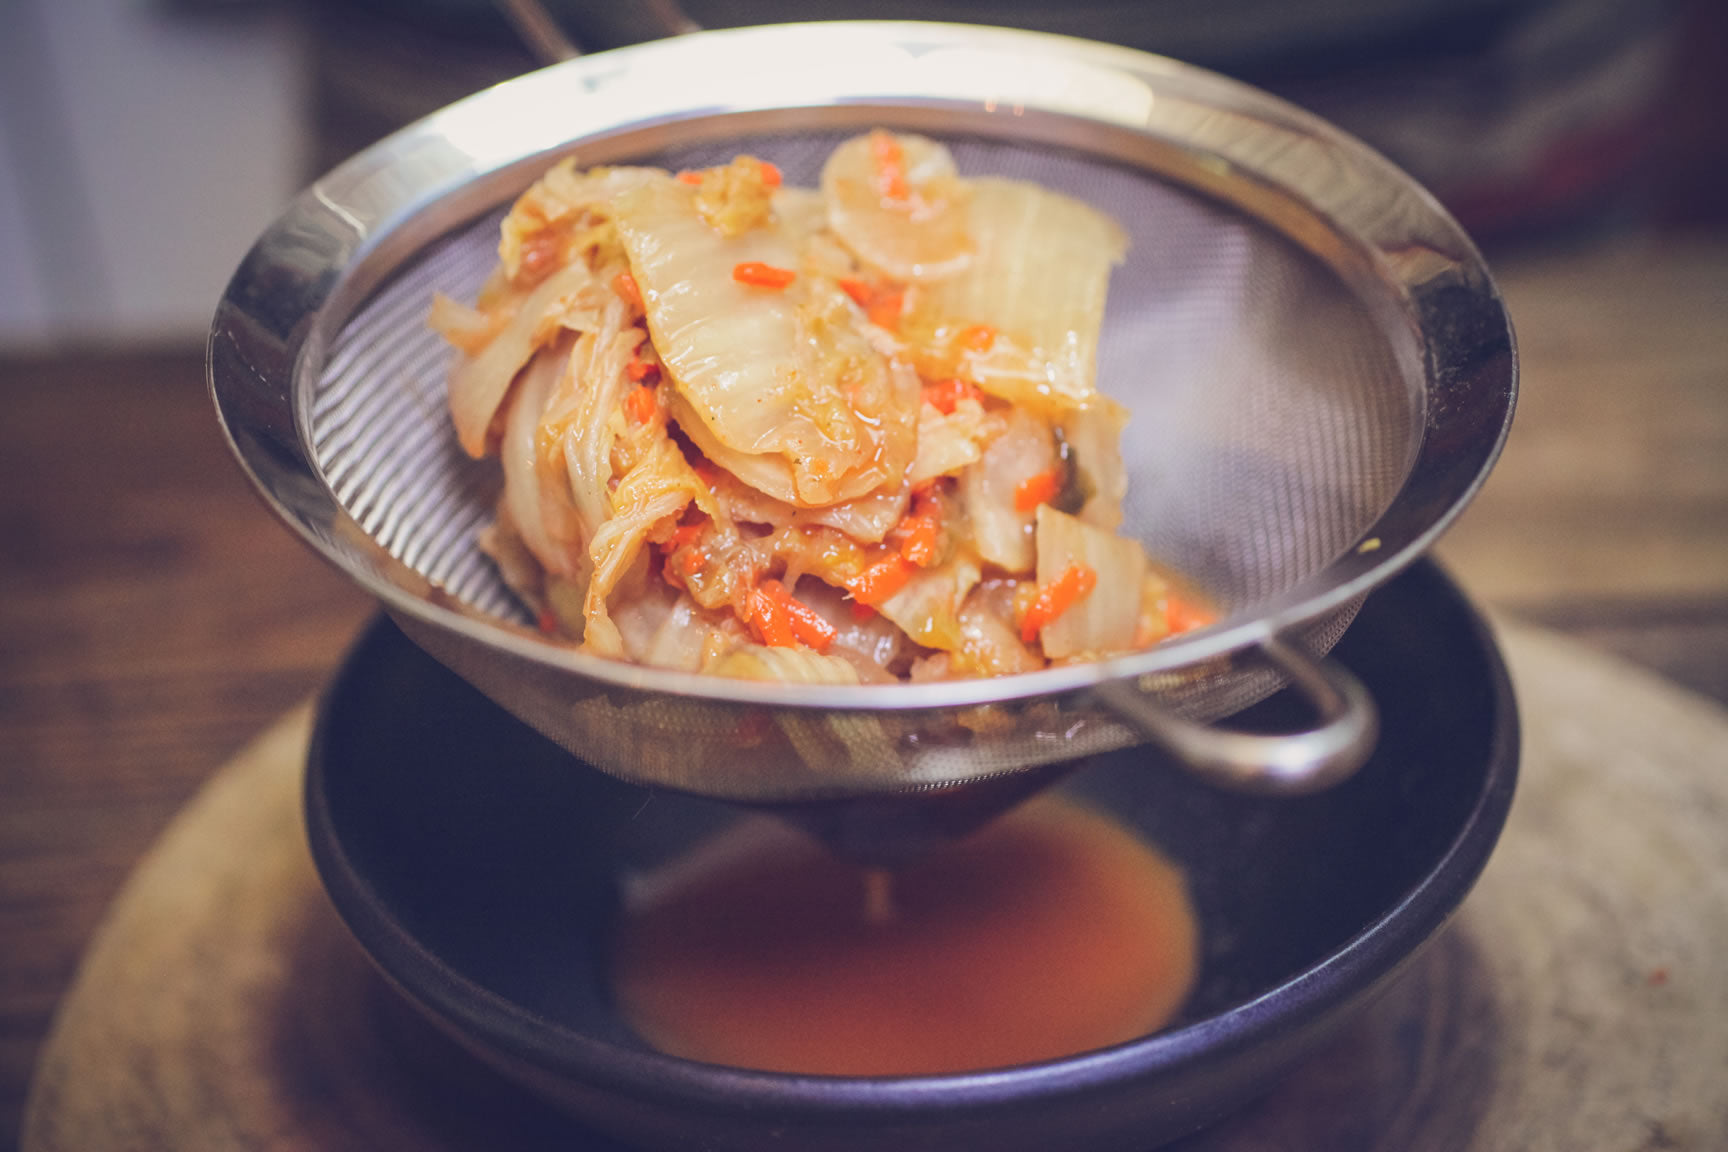 drain kimchi